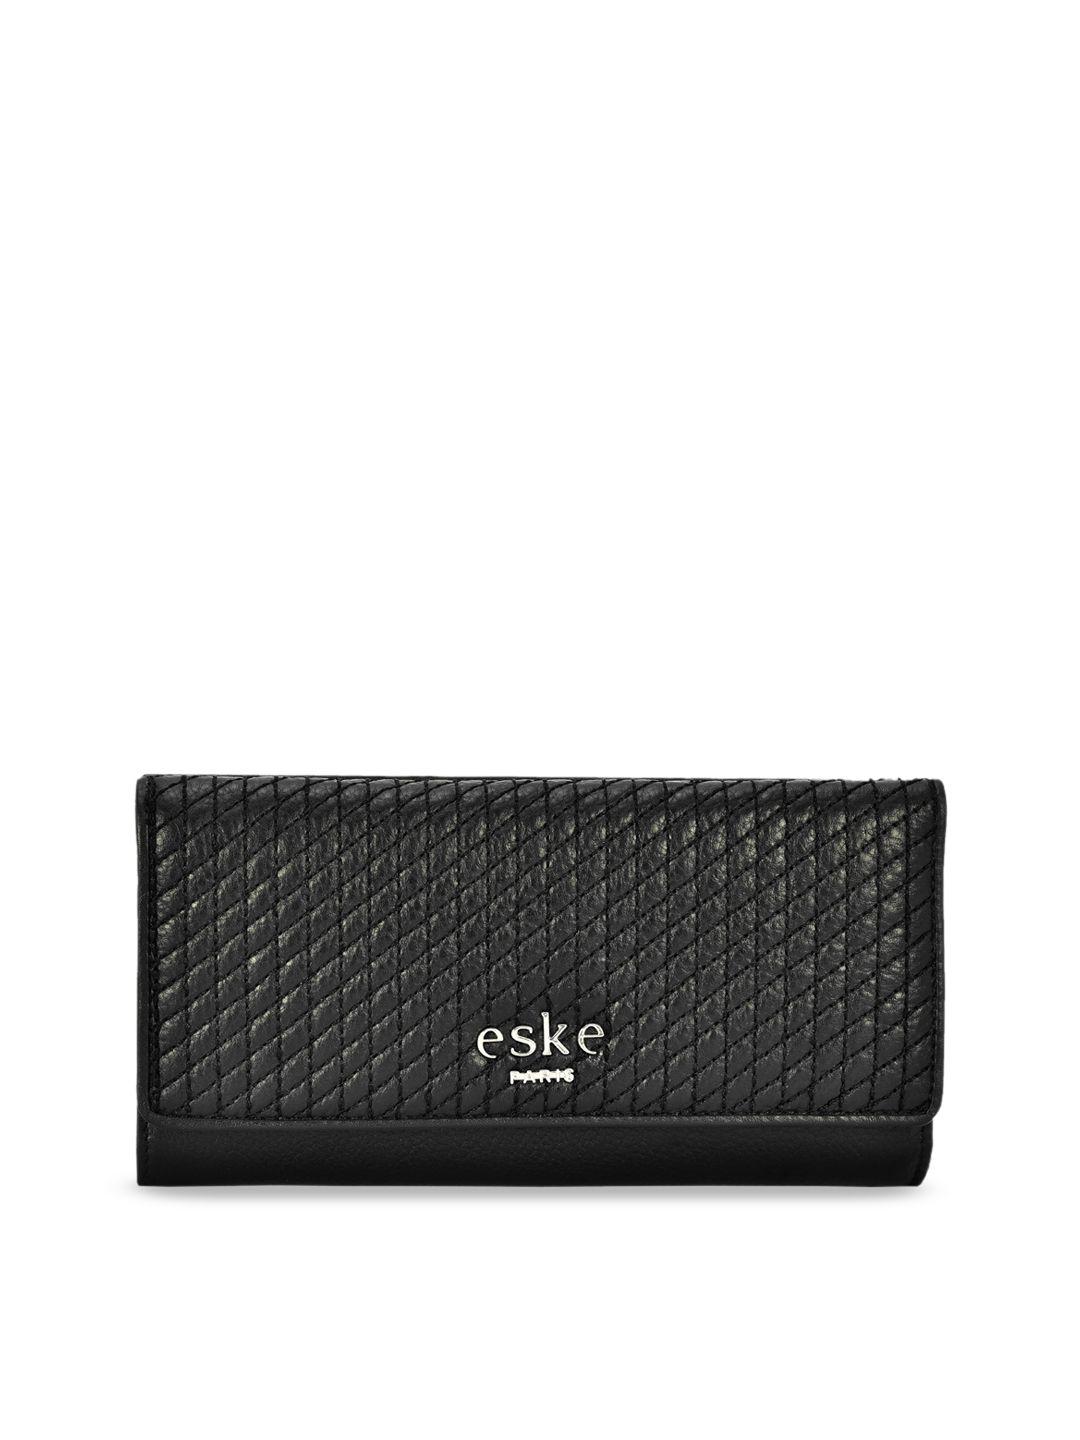 eske women black solid leather three fold wallet